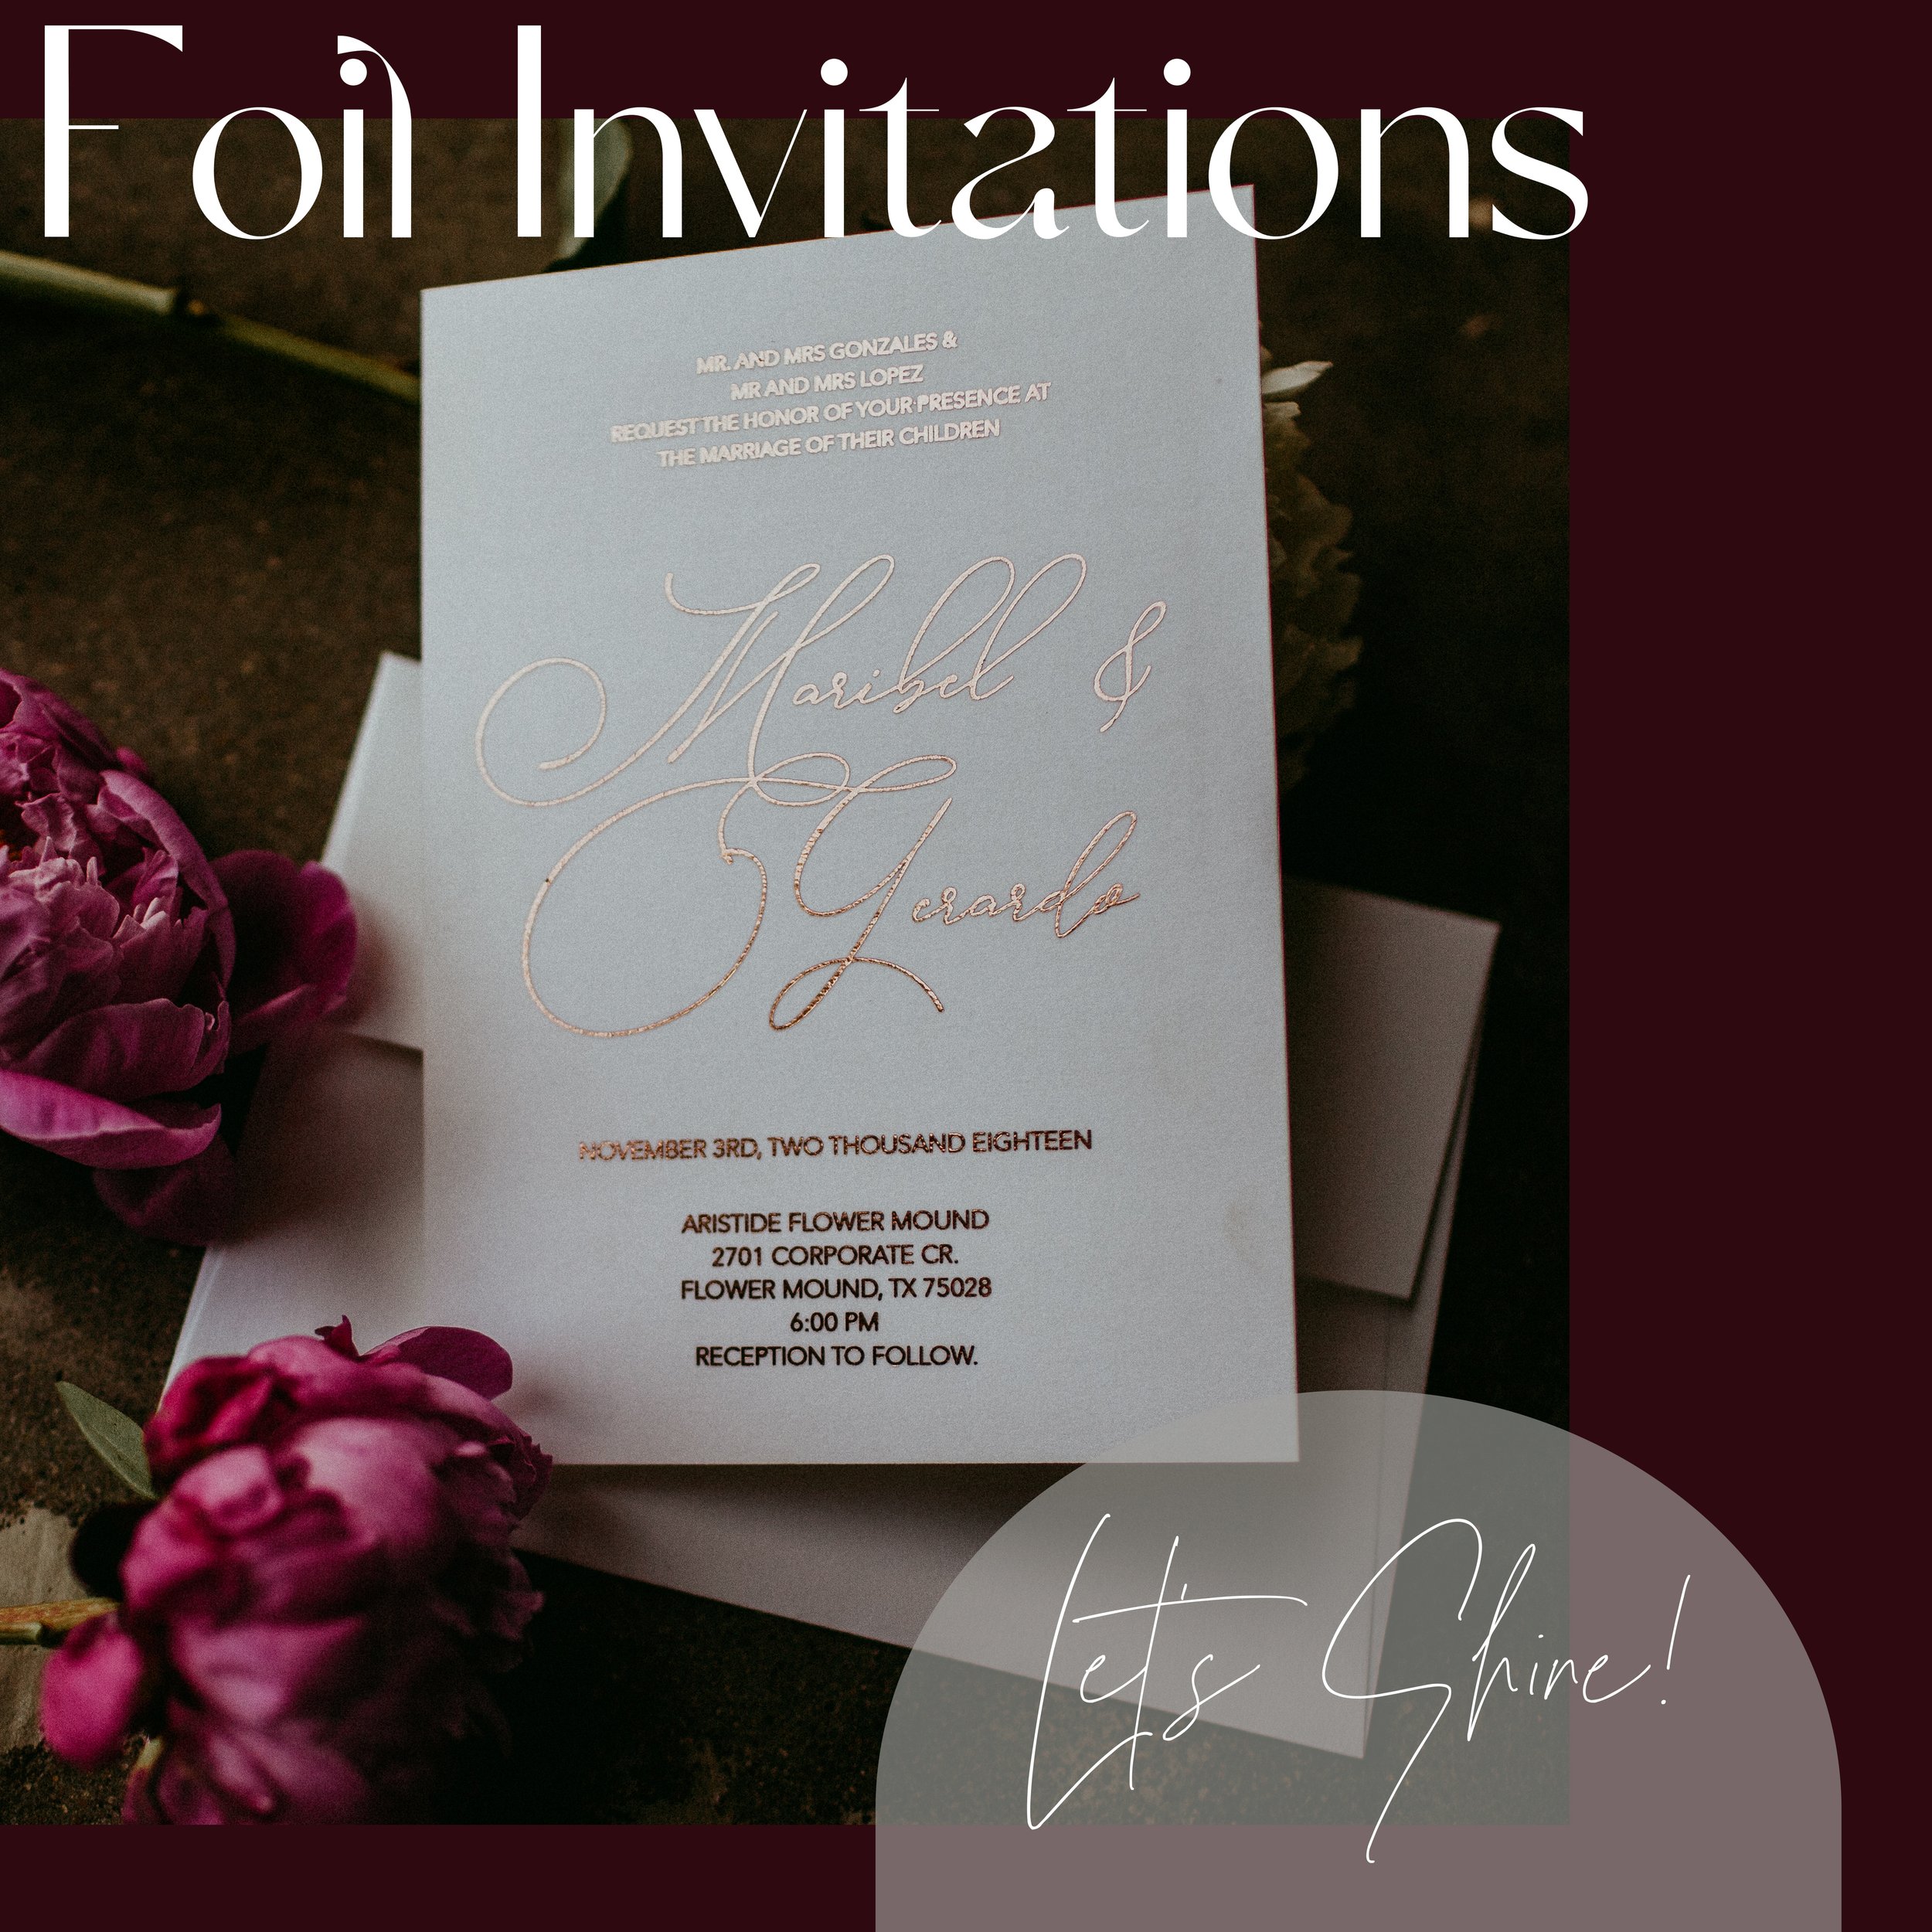 Foil Invitations.jpg